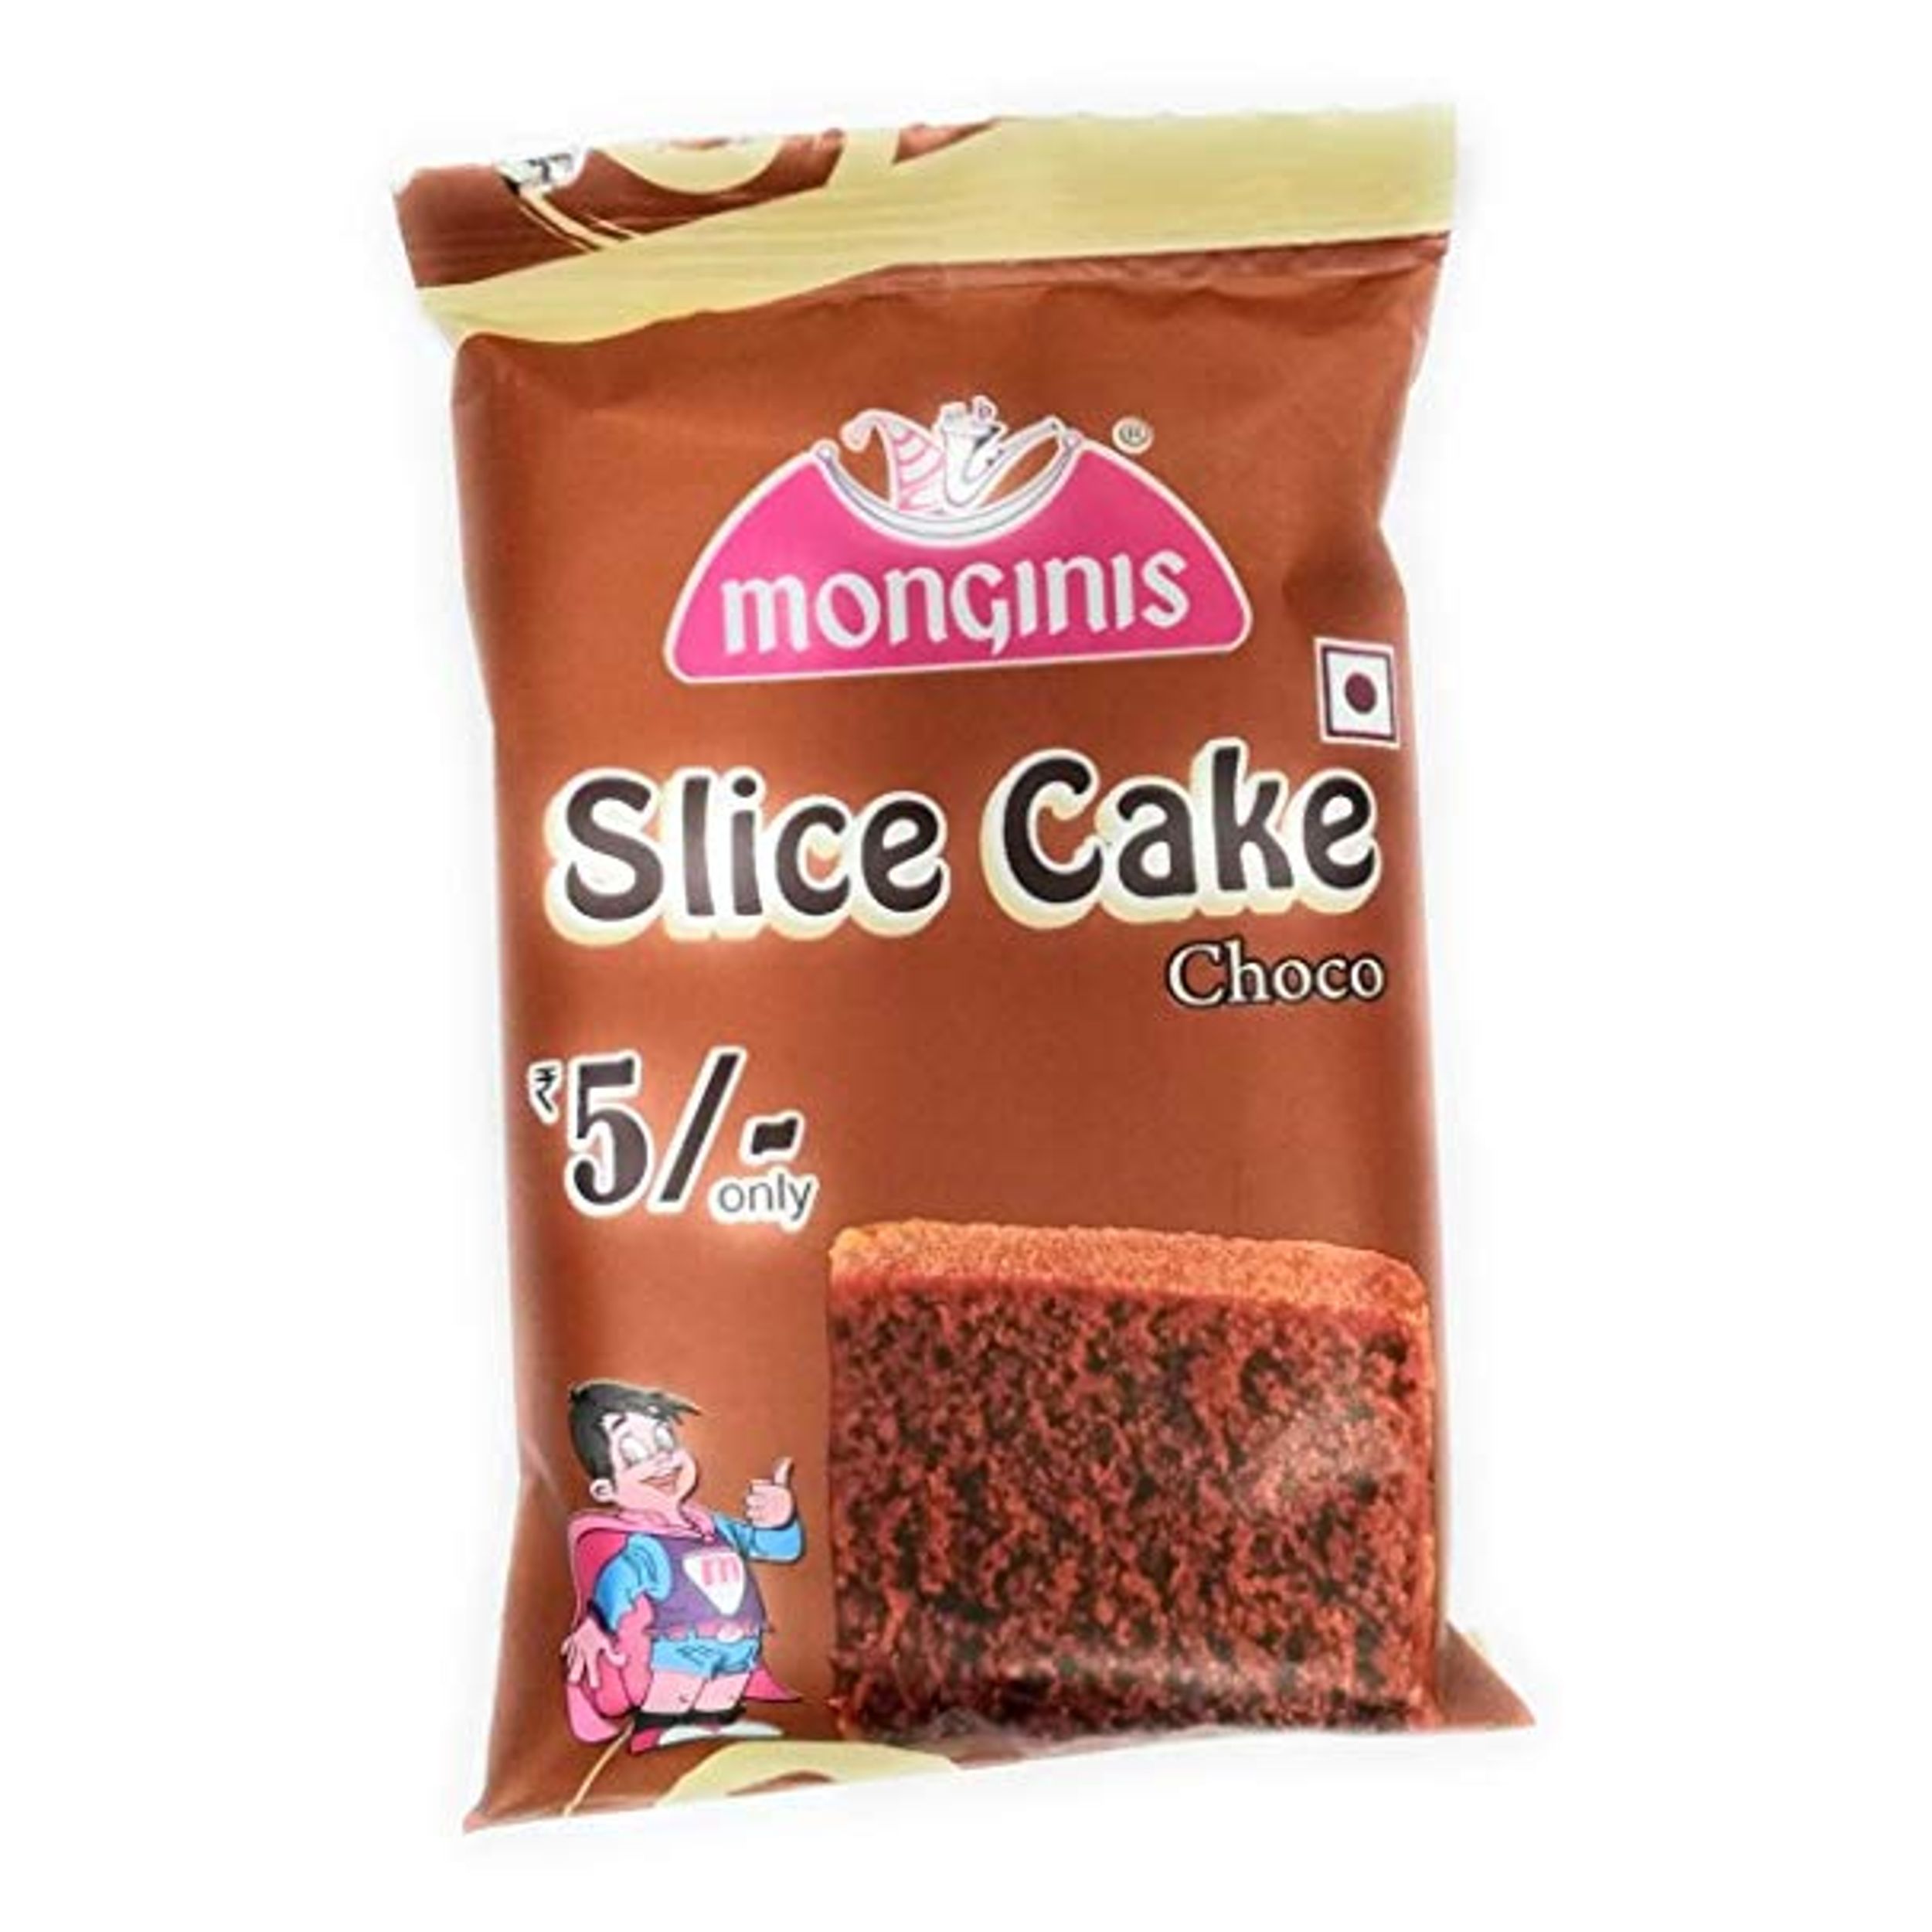 23 Monginis ideas | cake, cake shop, cake delivery